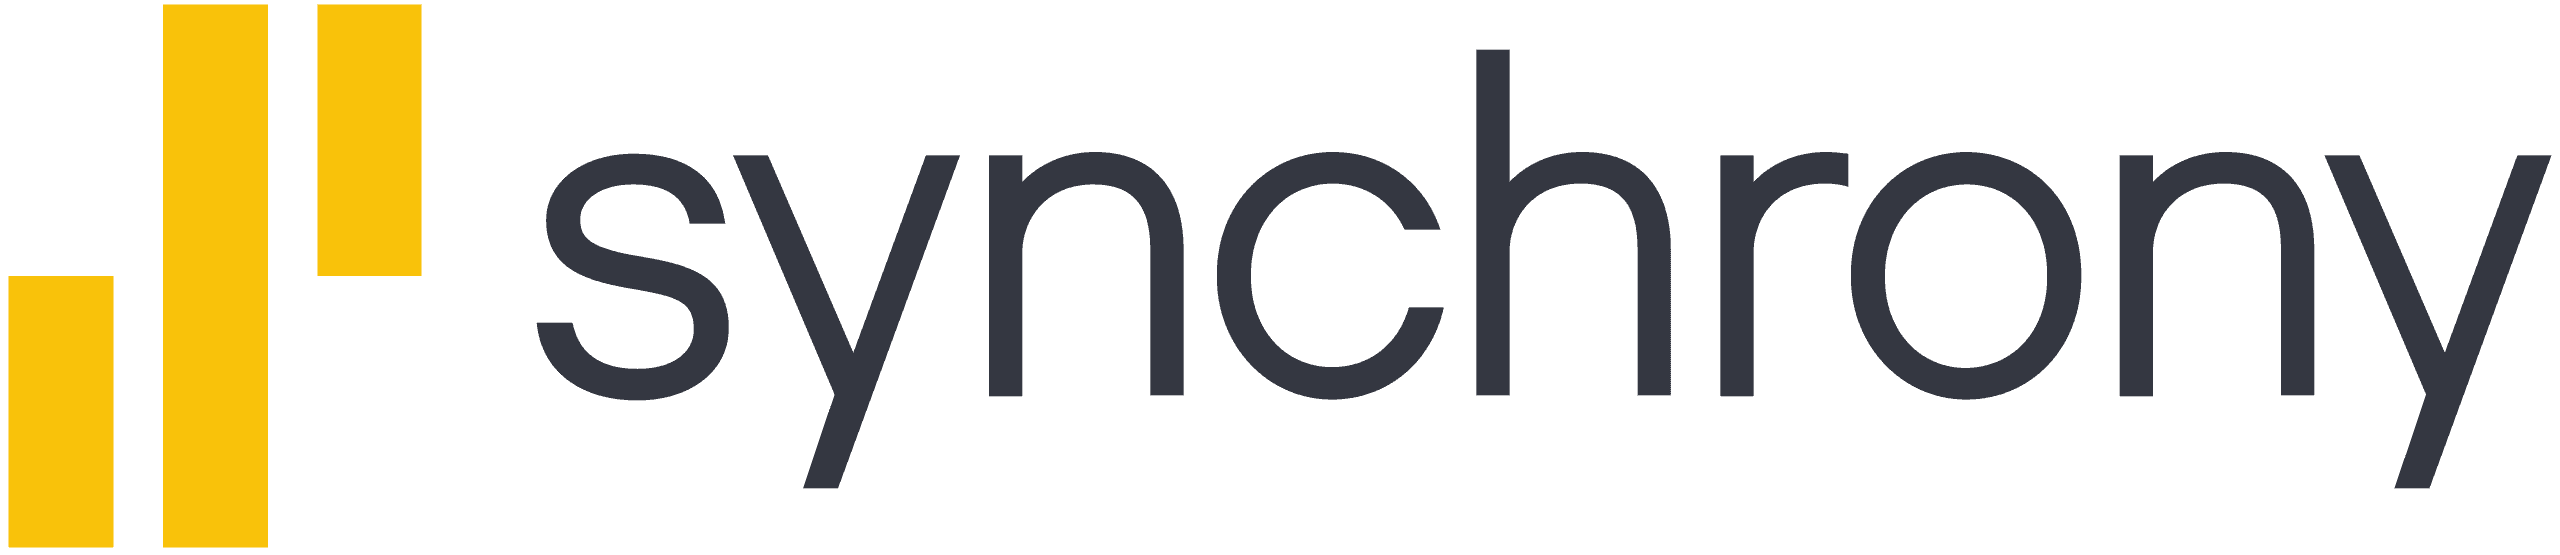 Synchrony Financial Logo Svg